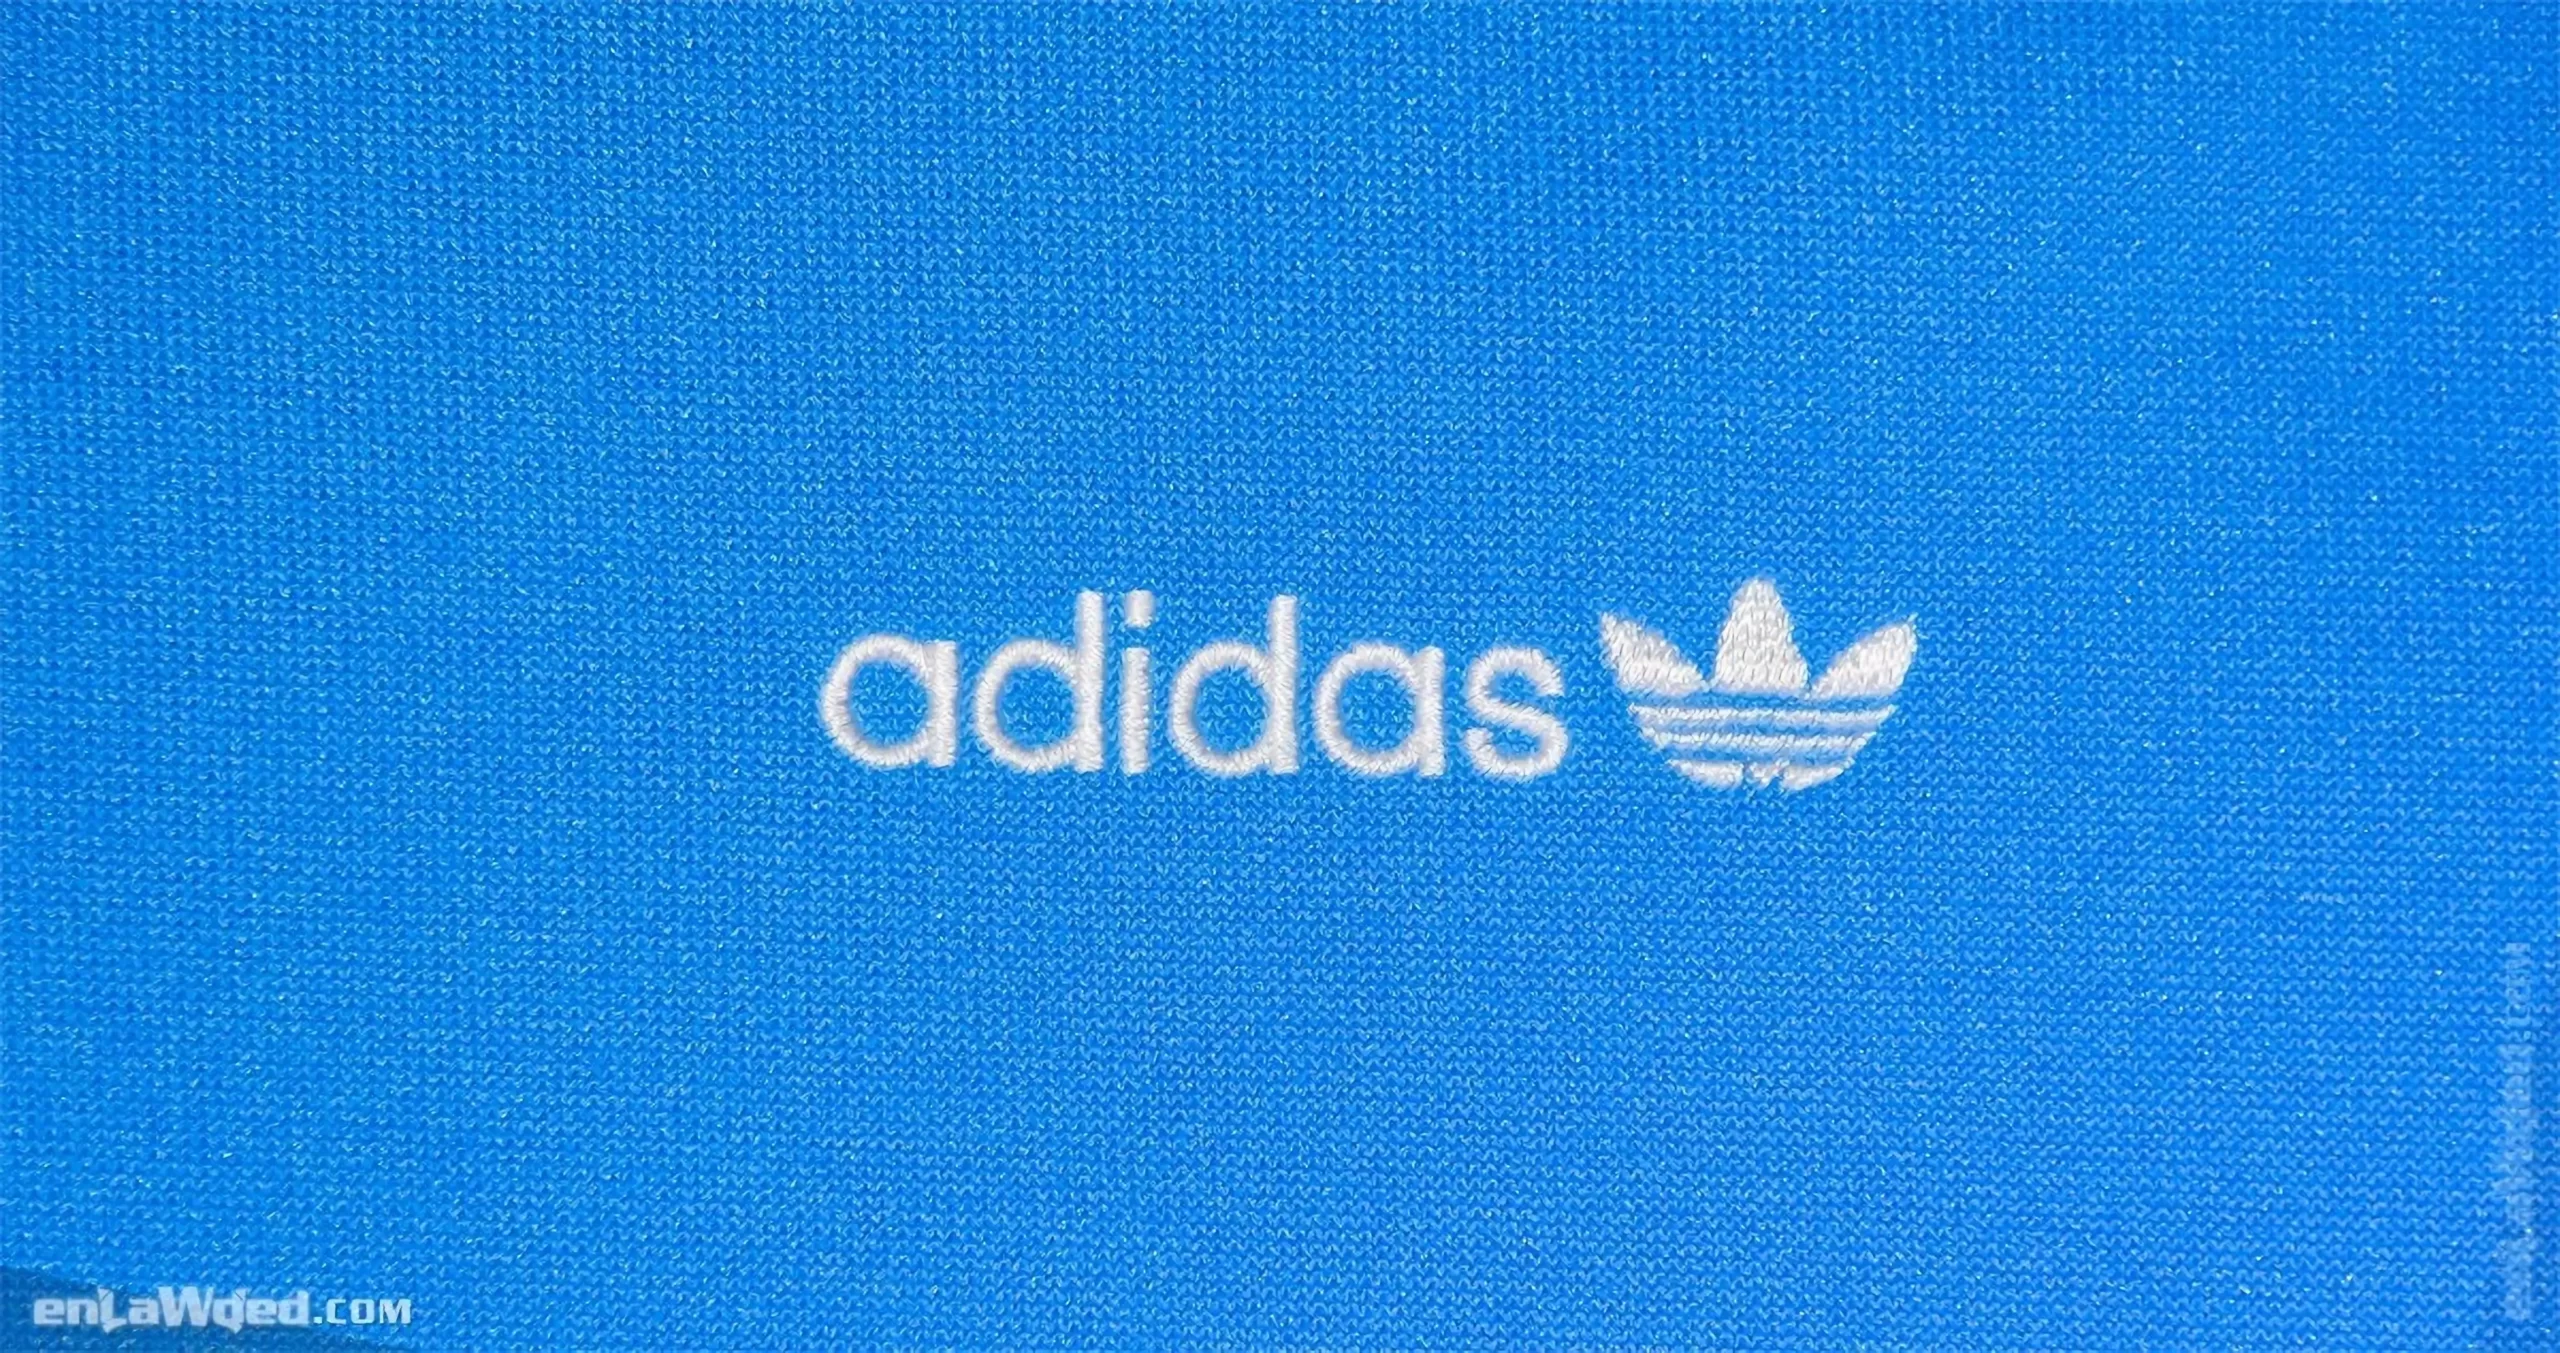 Men’s 2004 West Germany Olympic ’84 TT by Adidas: Interesting (EnLawded.com file #lmc3v8sgr5hsdwrviqb)